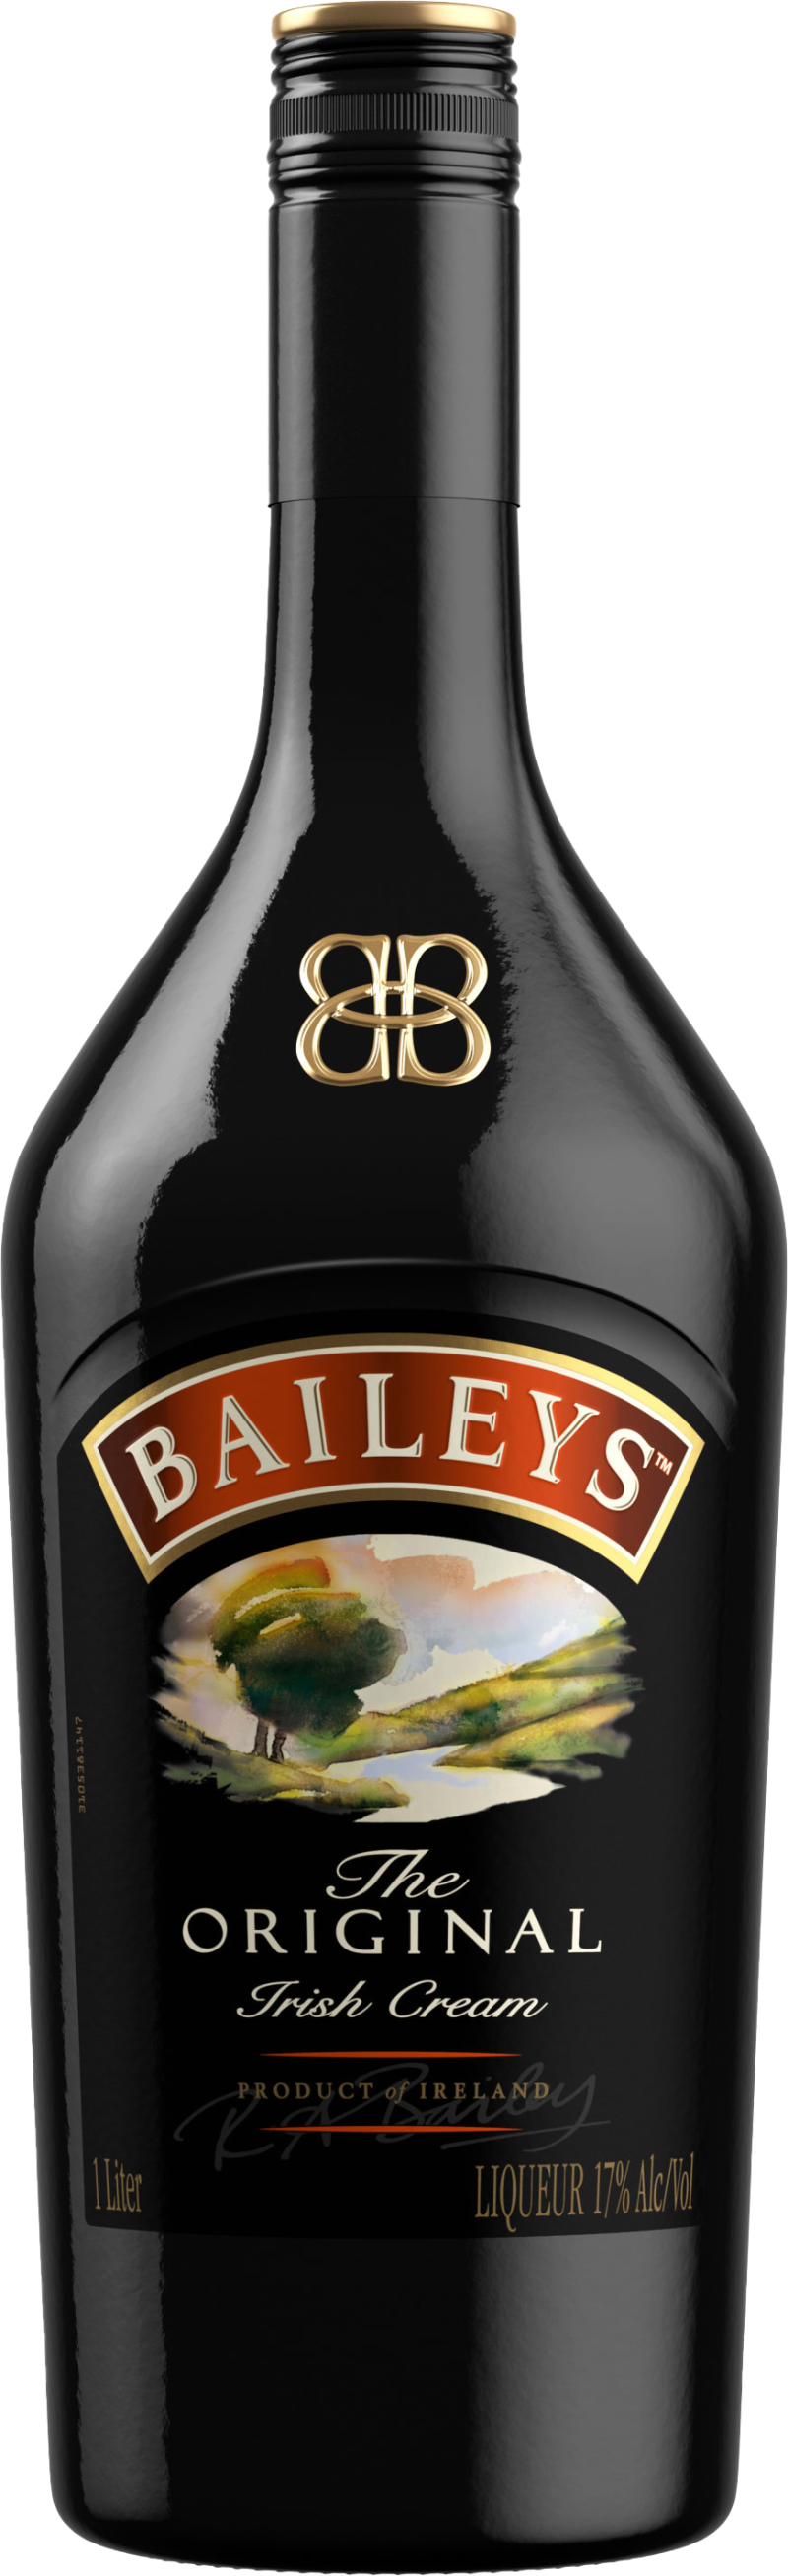 cl Irish 100 Cream - 17% vol Baileys Original